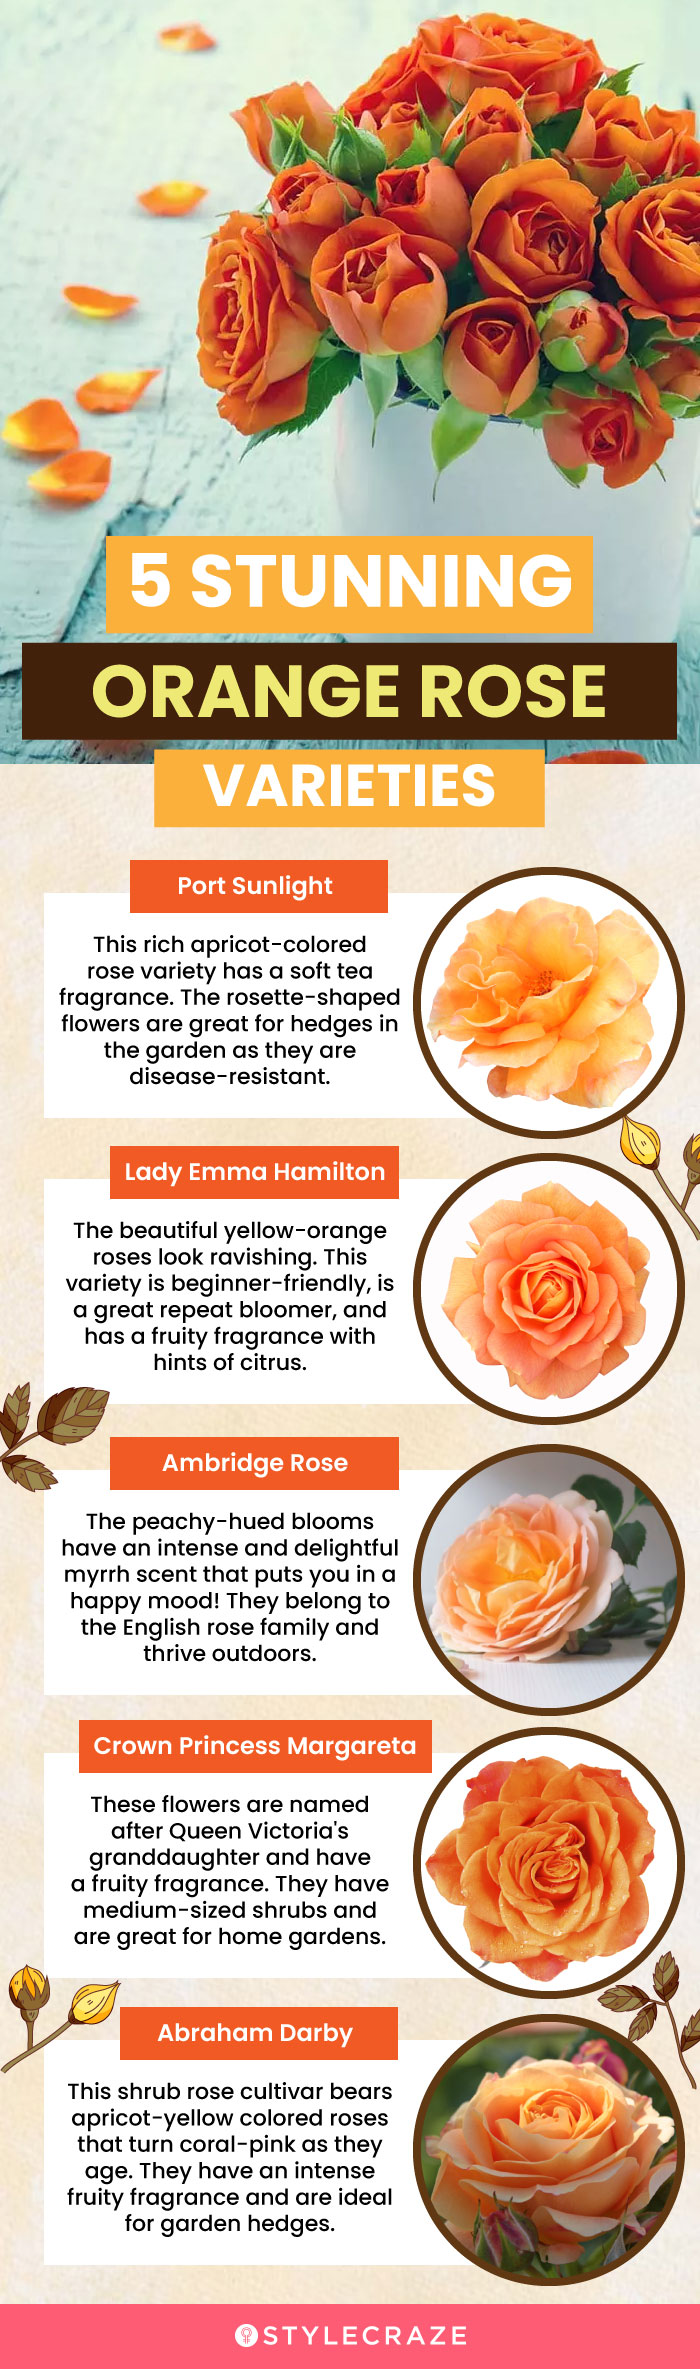 5 stunning orange rose varieties (infographic)